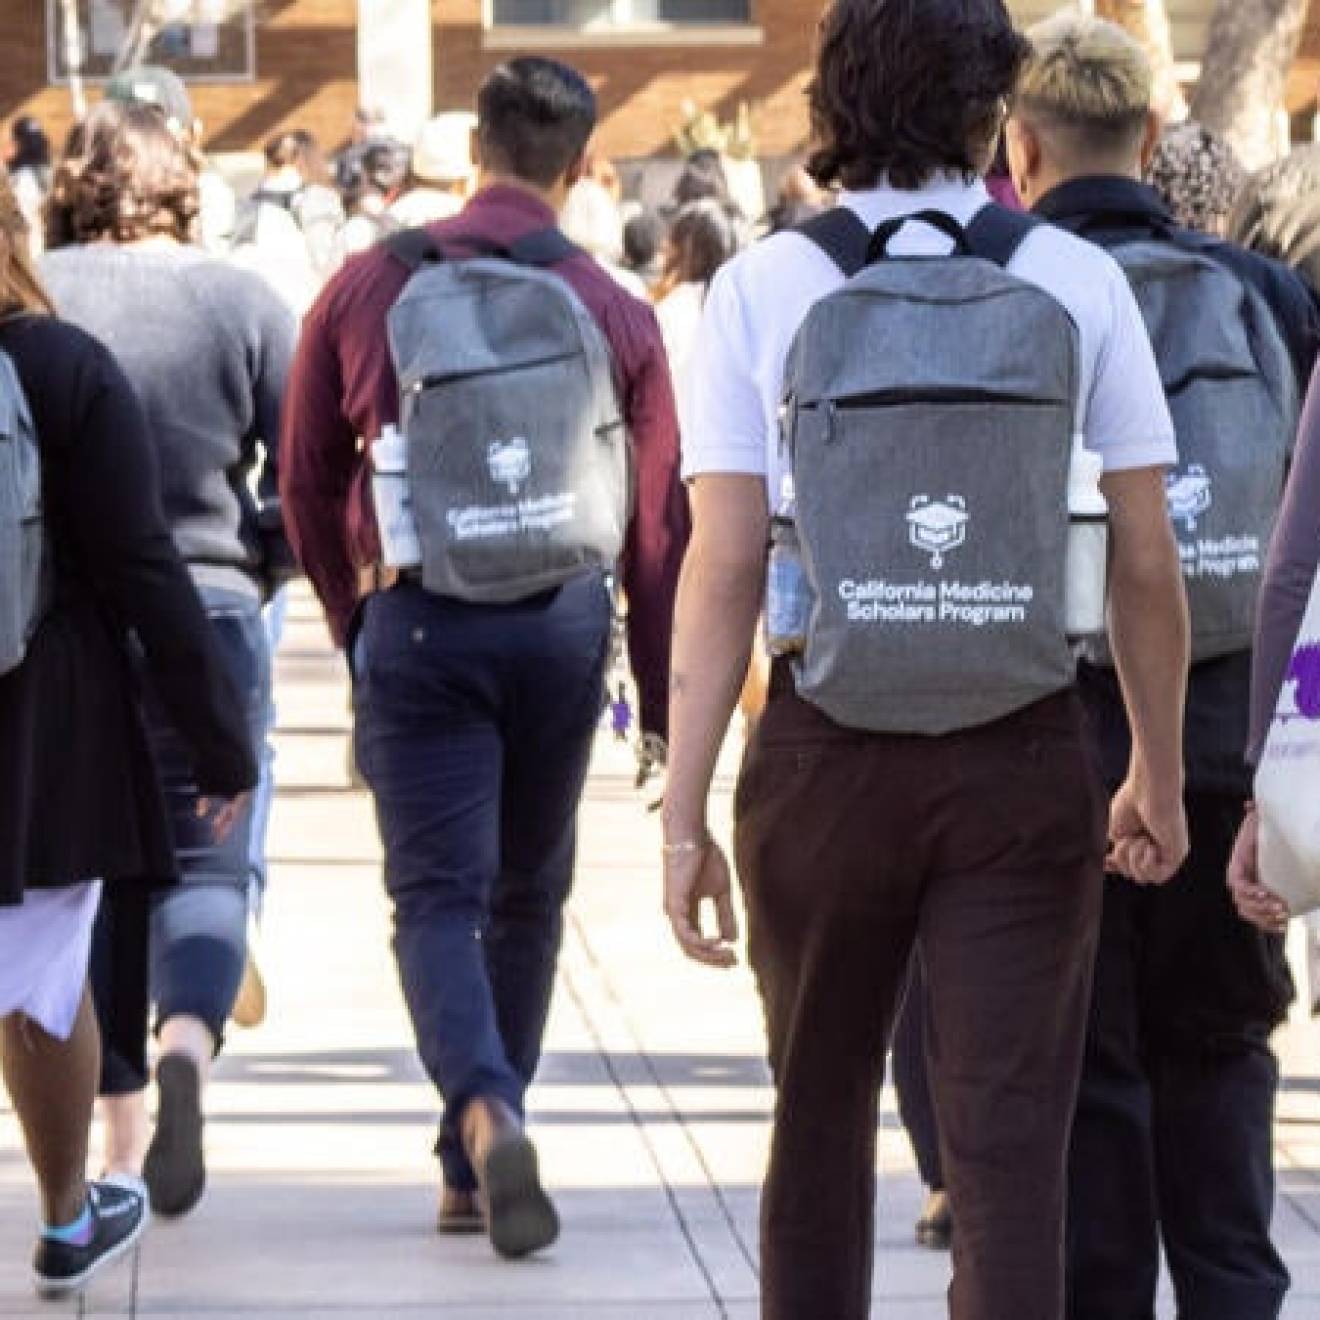 Students walking on UC Riverside campus with California Medicine Scholars Program backpacks